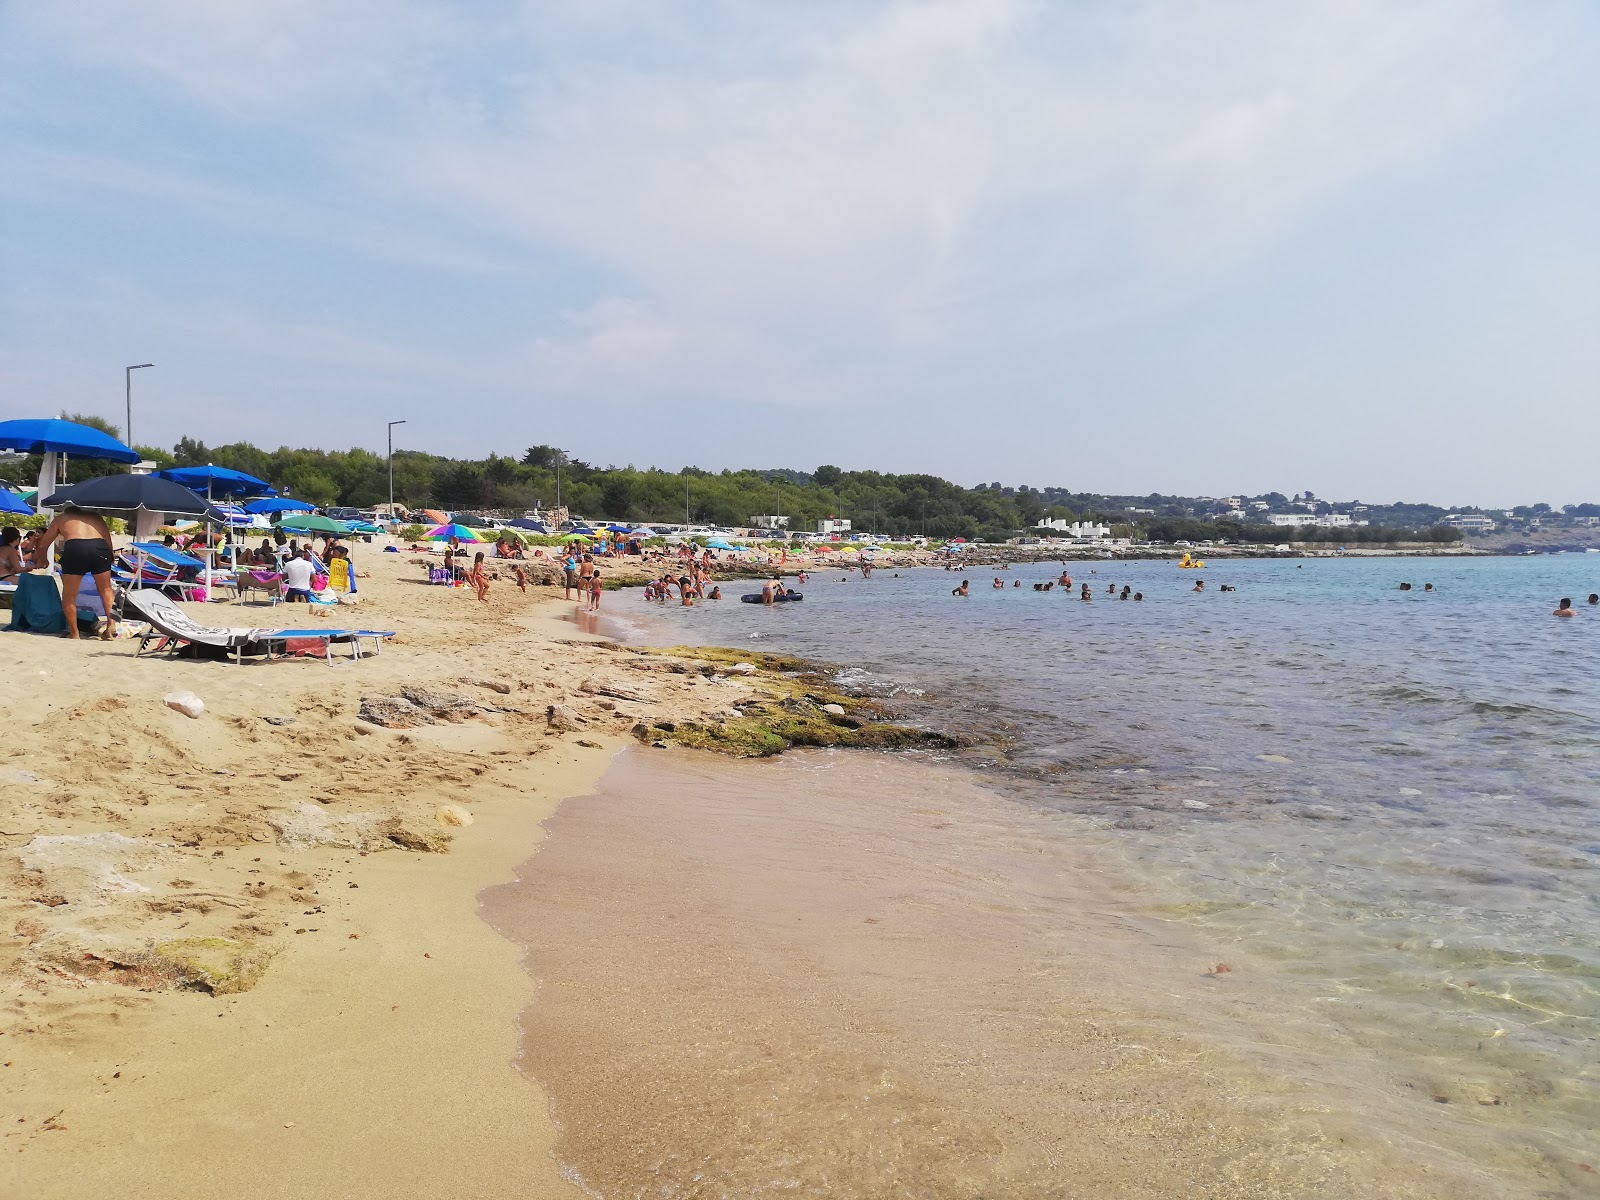 Foto de Felloniche Spiaggia con parcialmente limpio nivel de limpieza